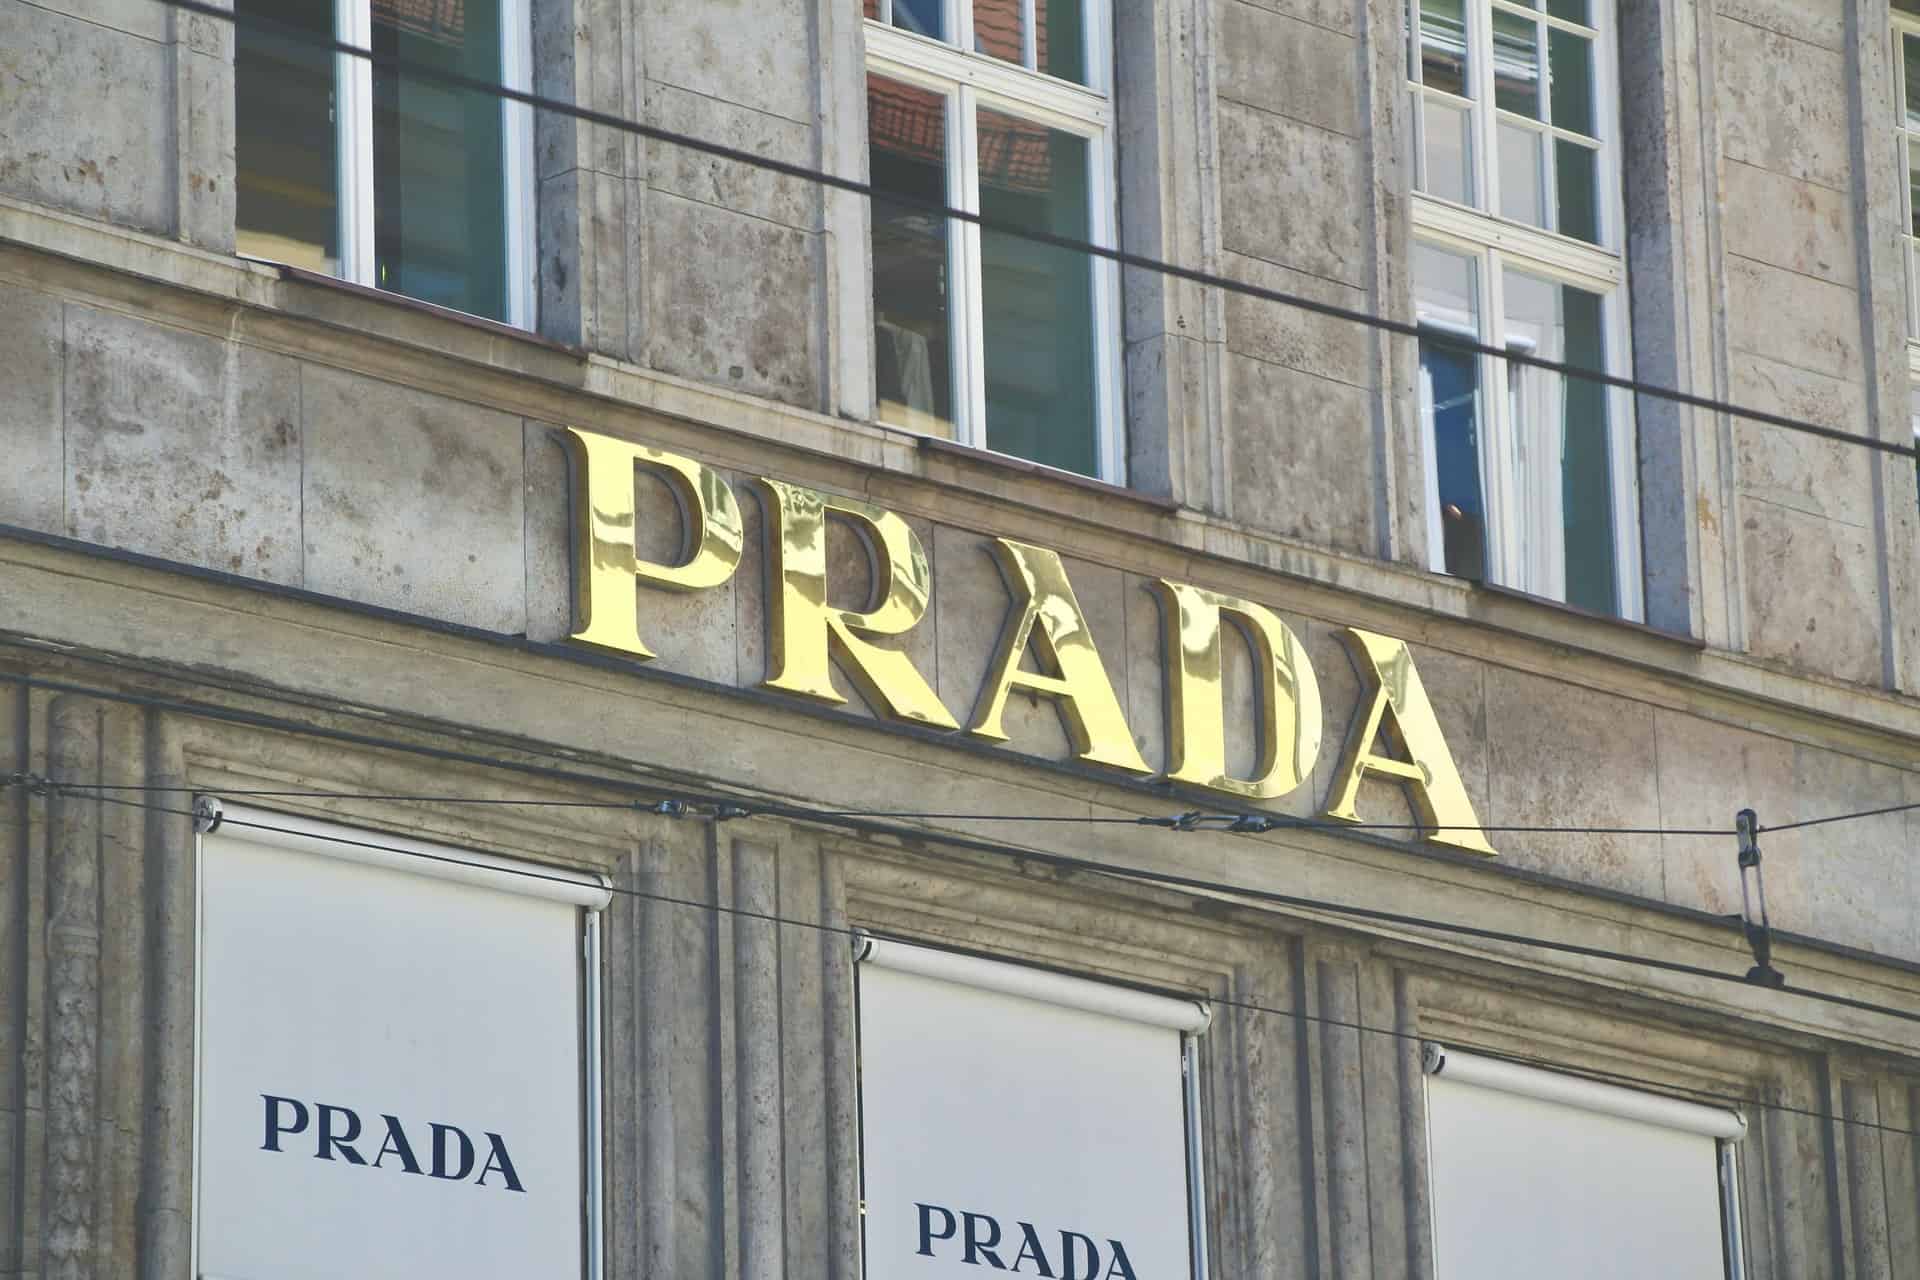 Miuccia Prada – we take a look at the silhouette of the legend of Italian fashion